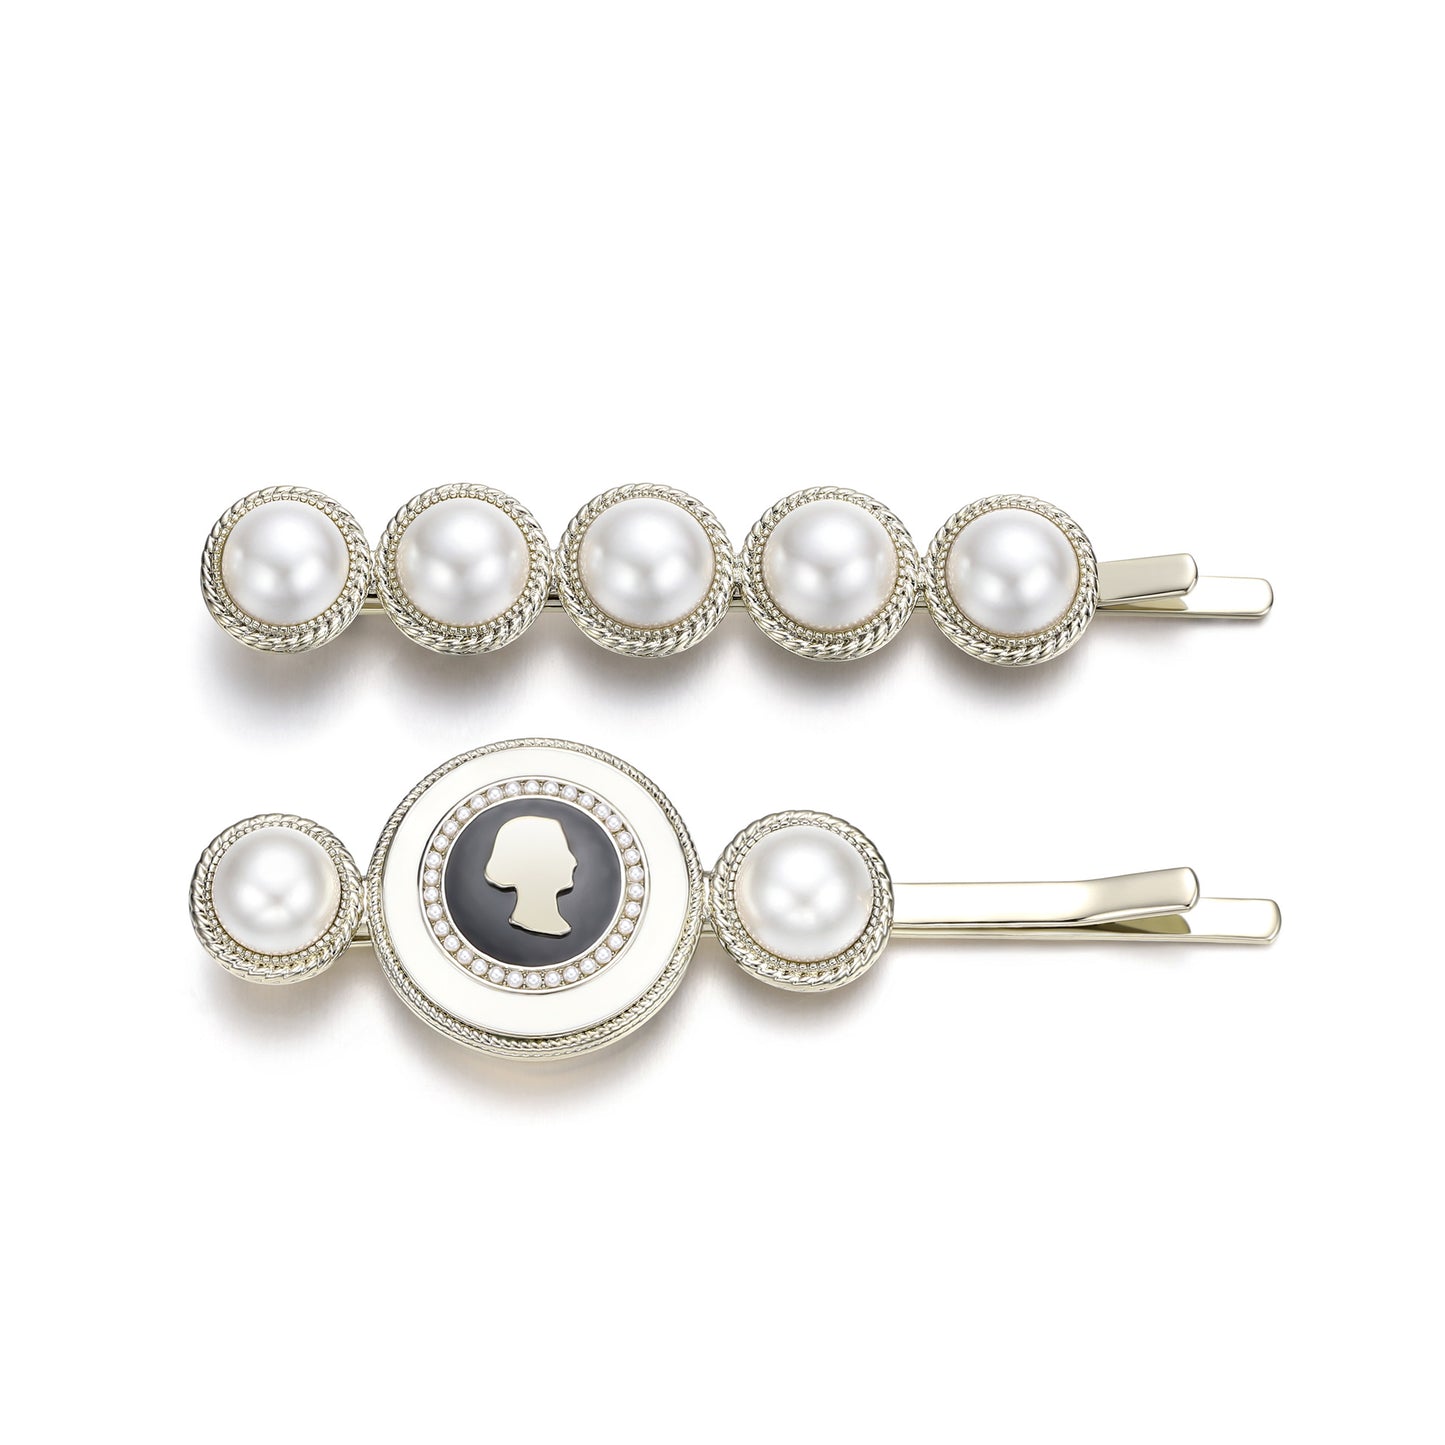 Canadian designer Victoria collection elegant fashion pearl hair clip delicate pair clip side clip bangs clip women